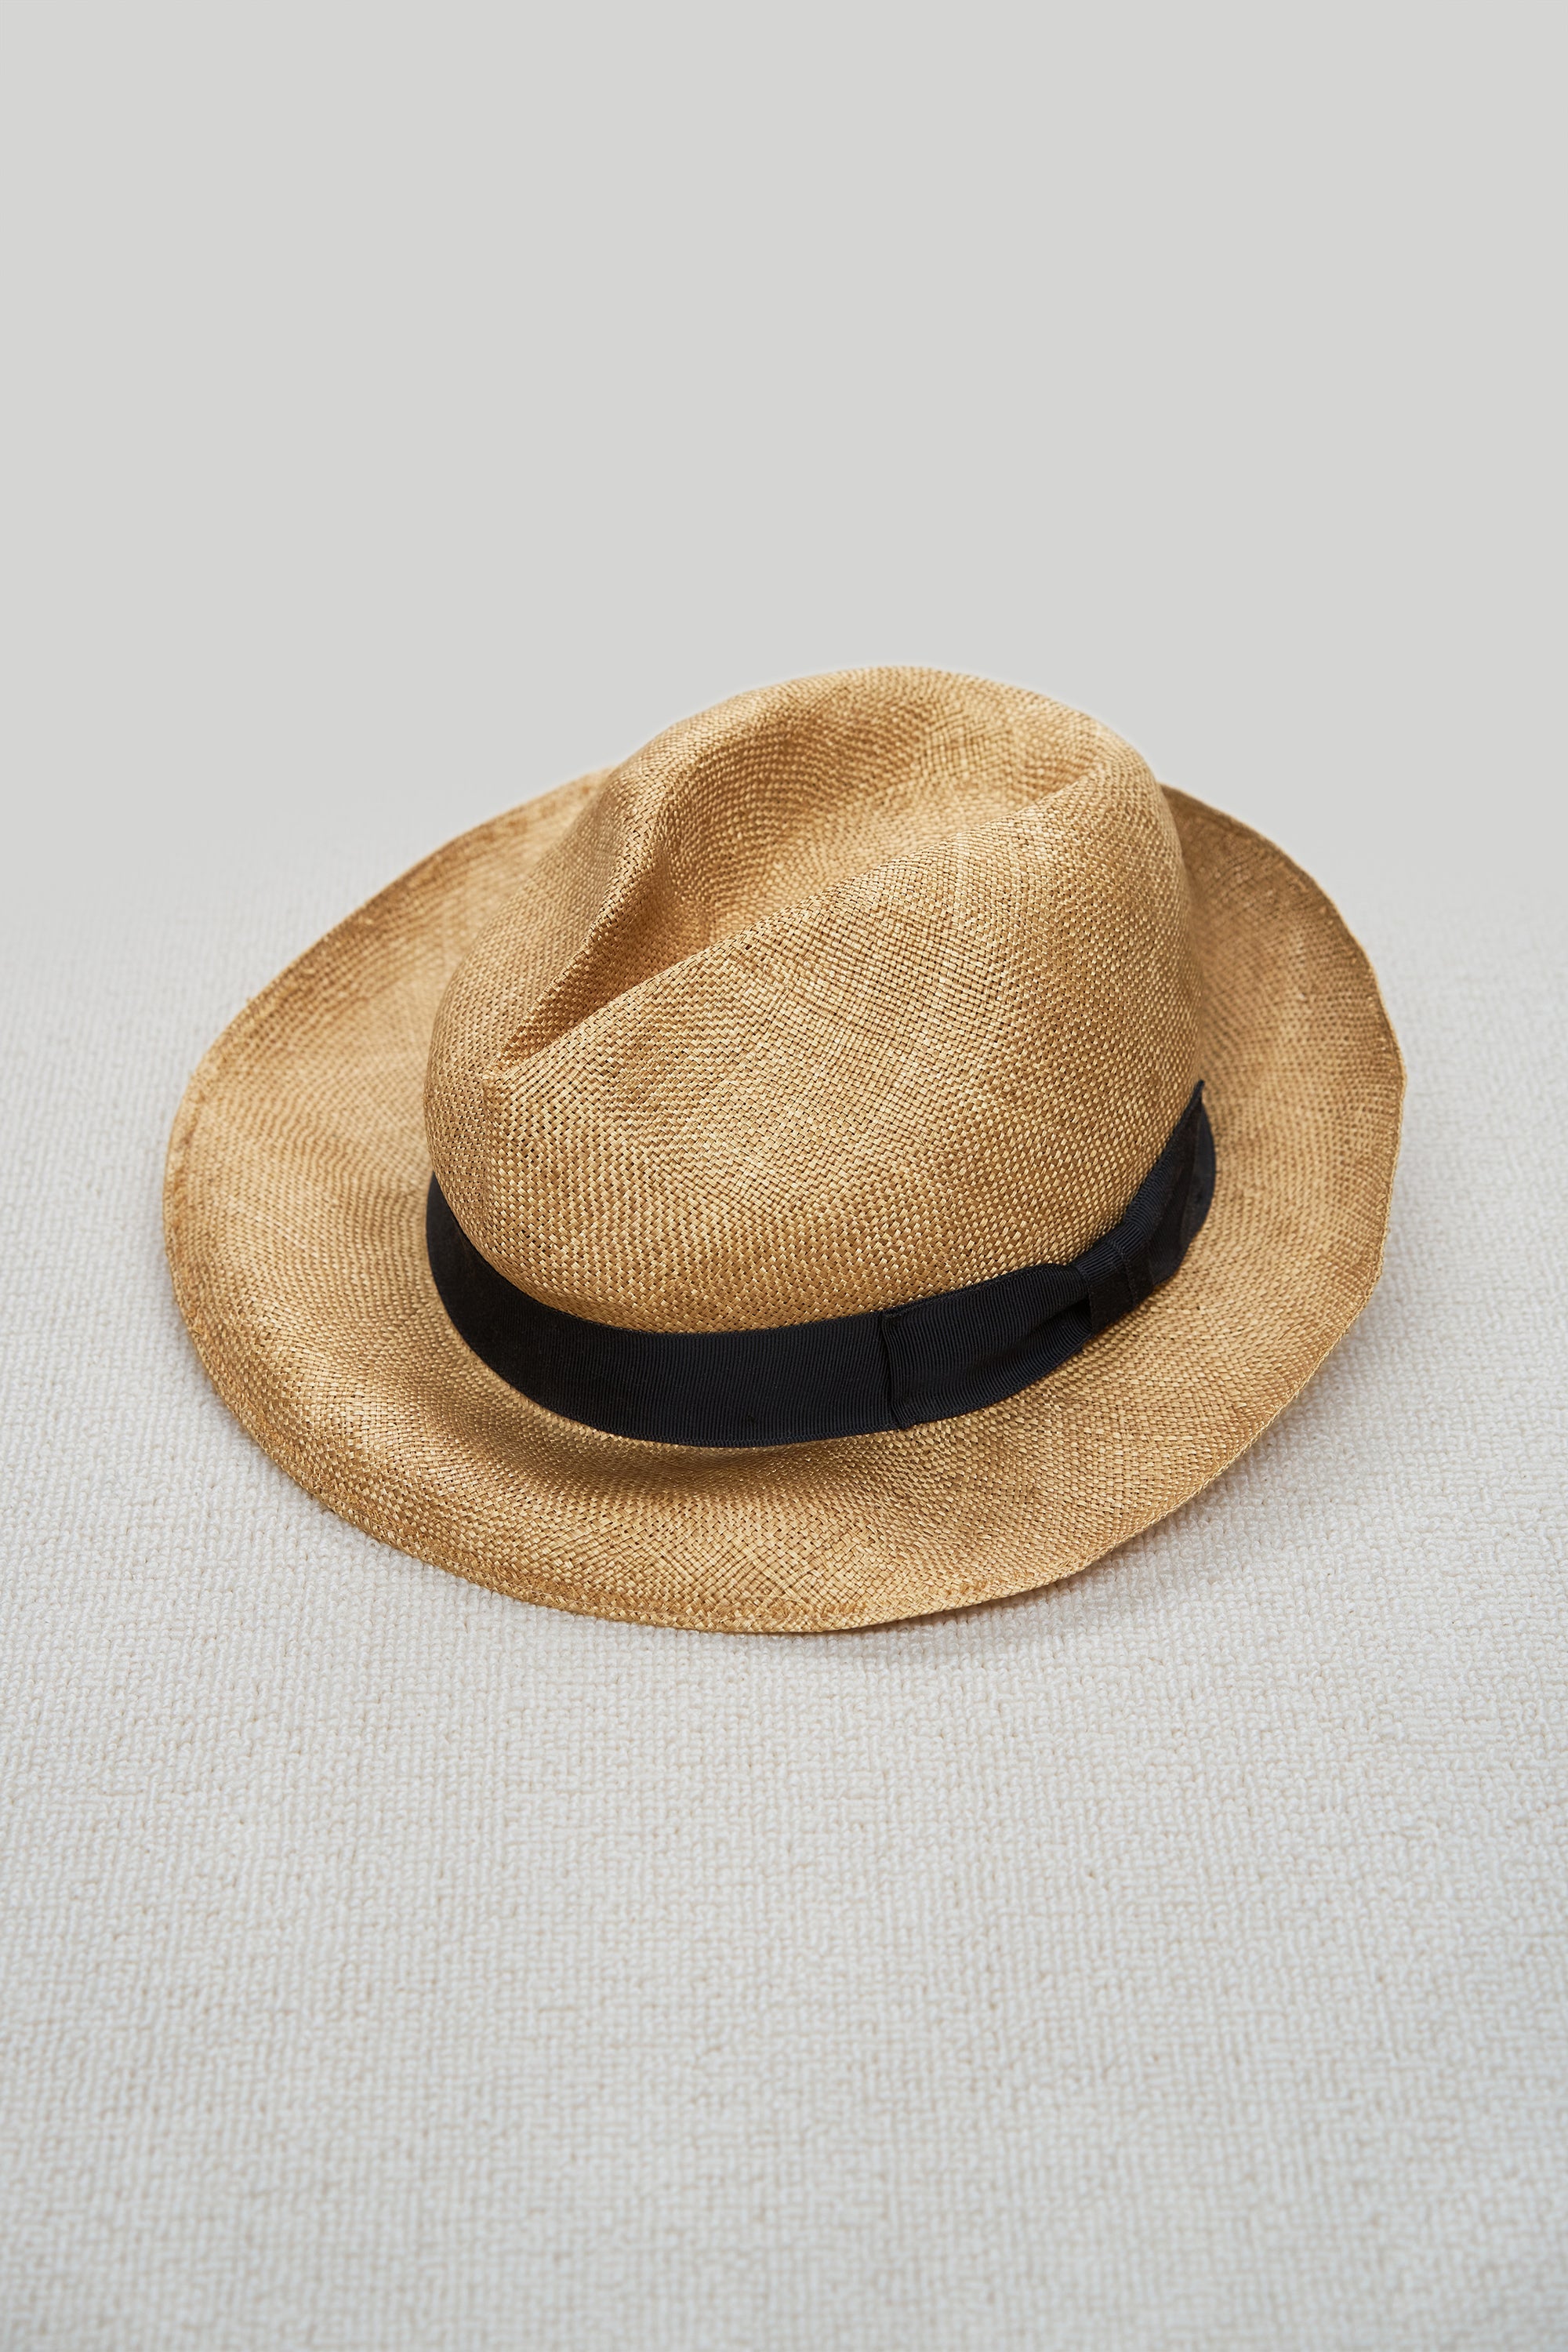 Lock & Co Panama Straw Hat